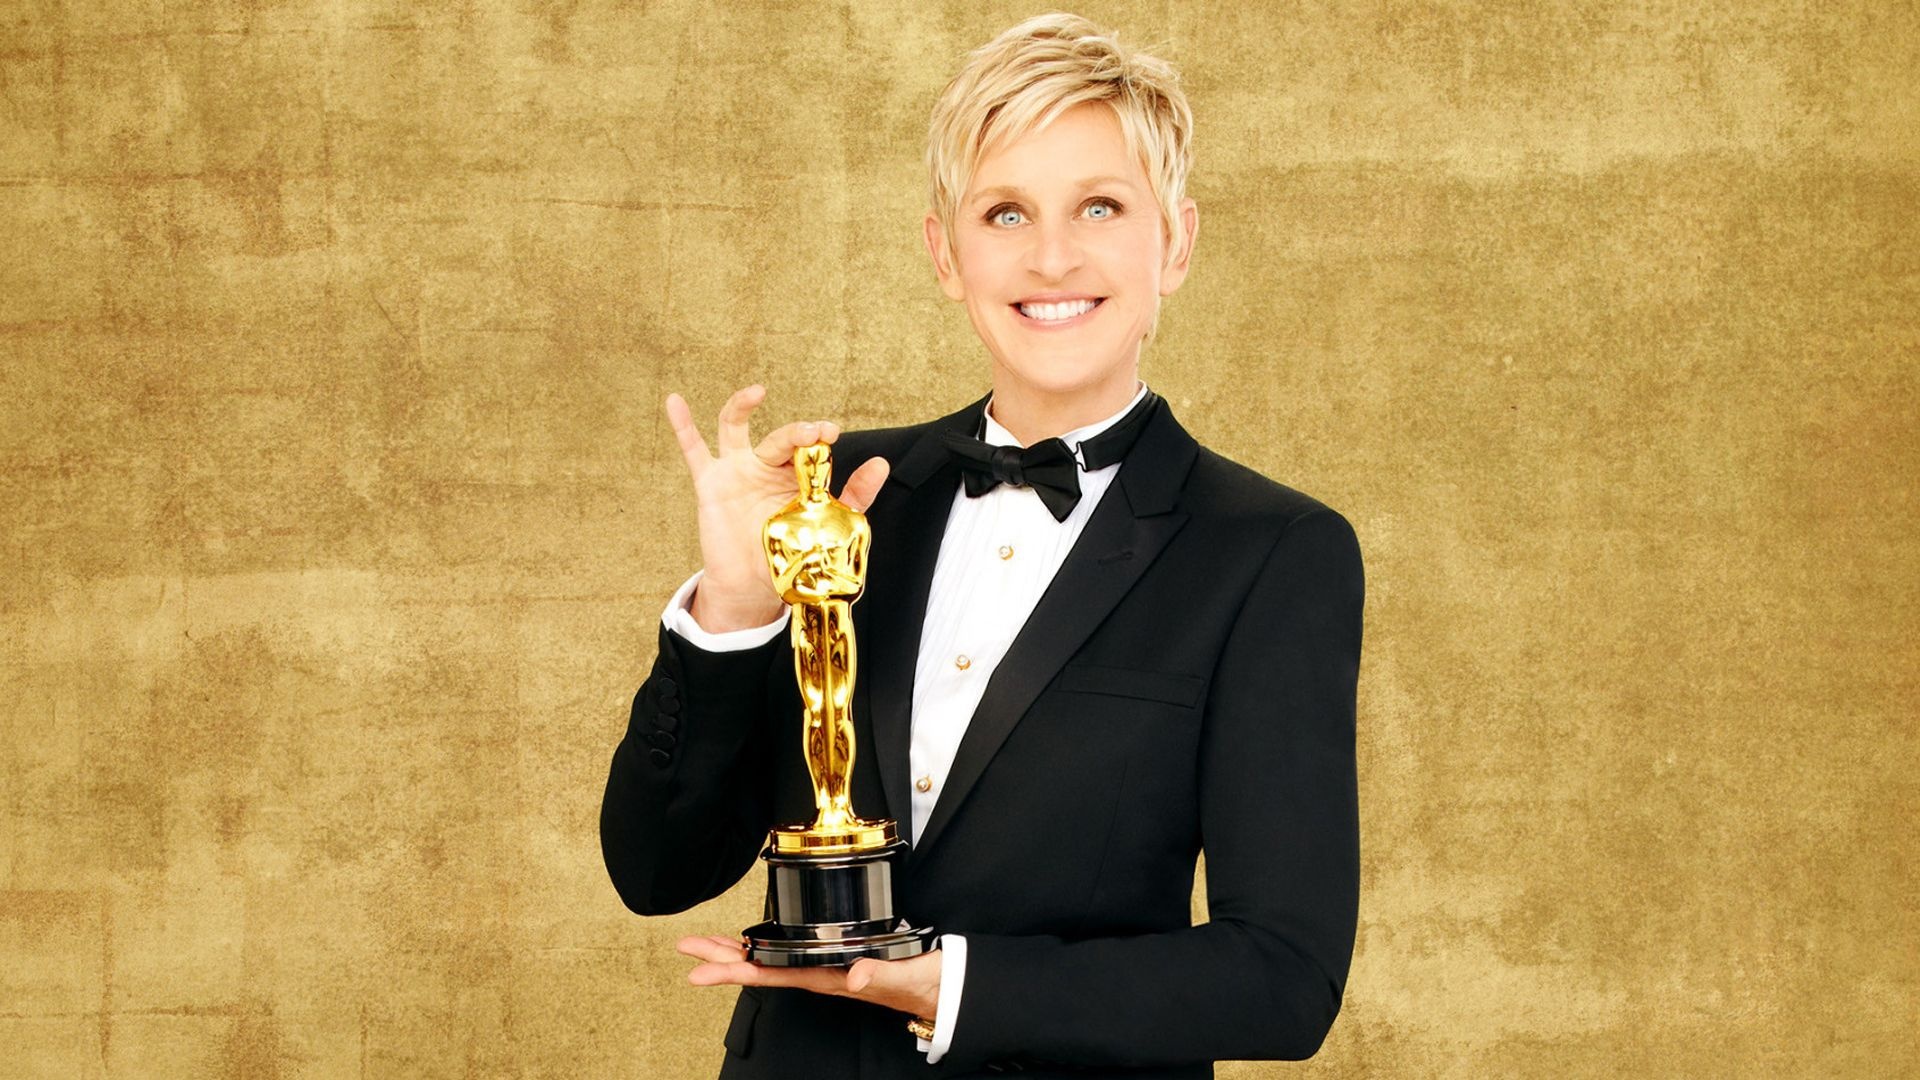 Ellen DeGeneres: The vivacious comedian, actress, writer, and producer. 1920x1080 Full HD Wallpaper.